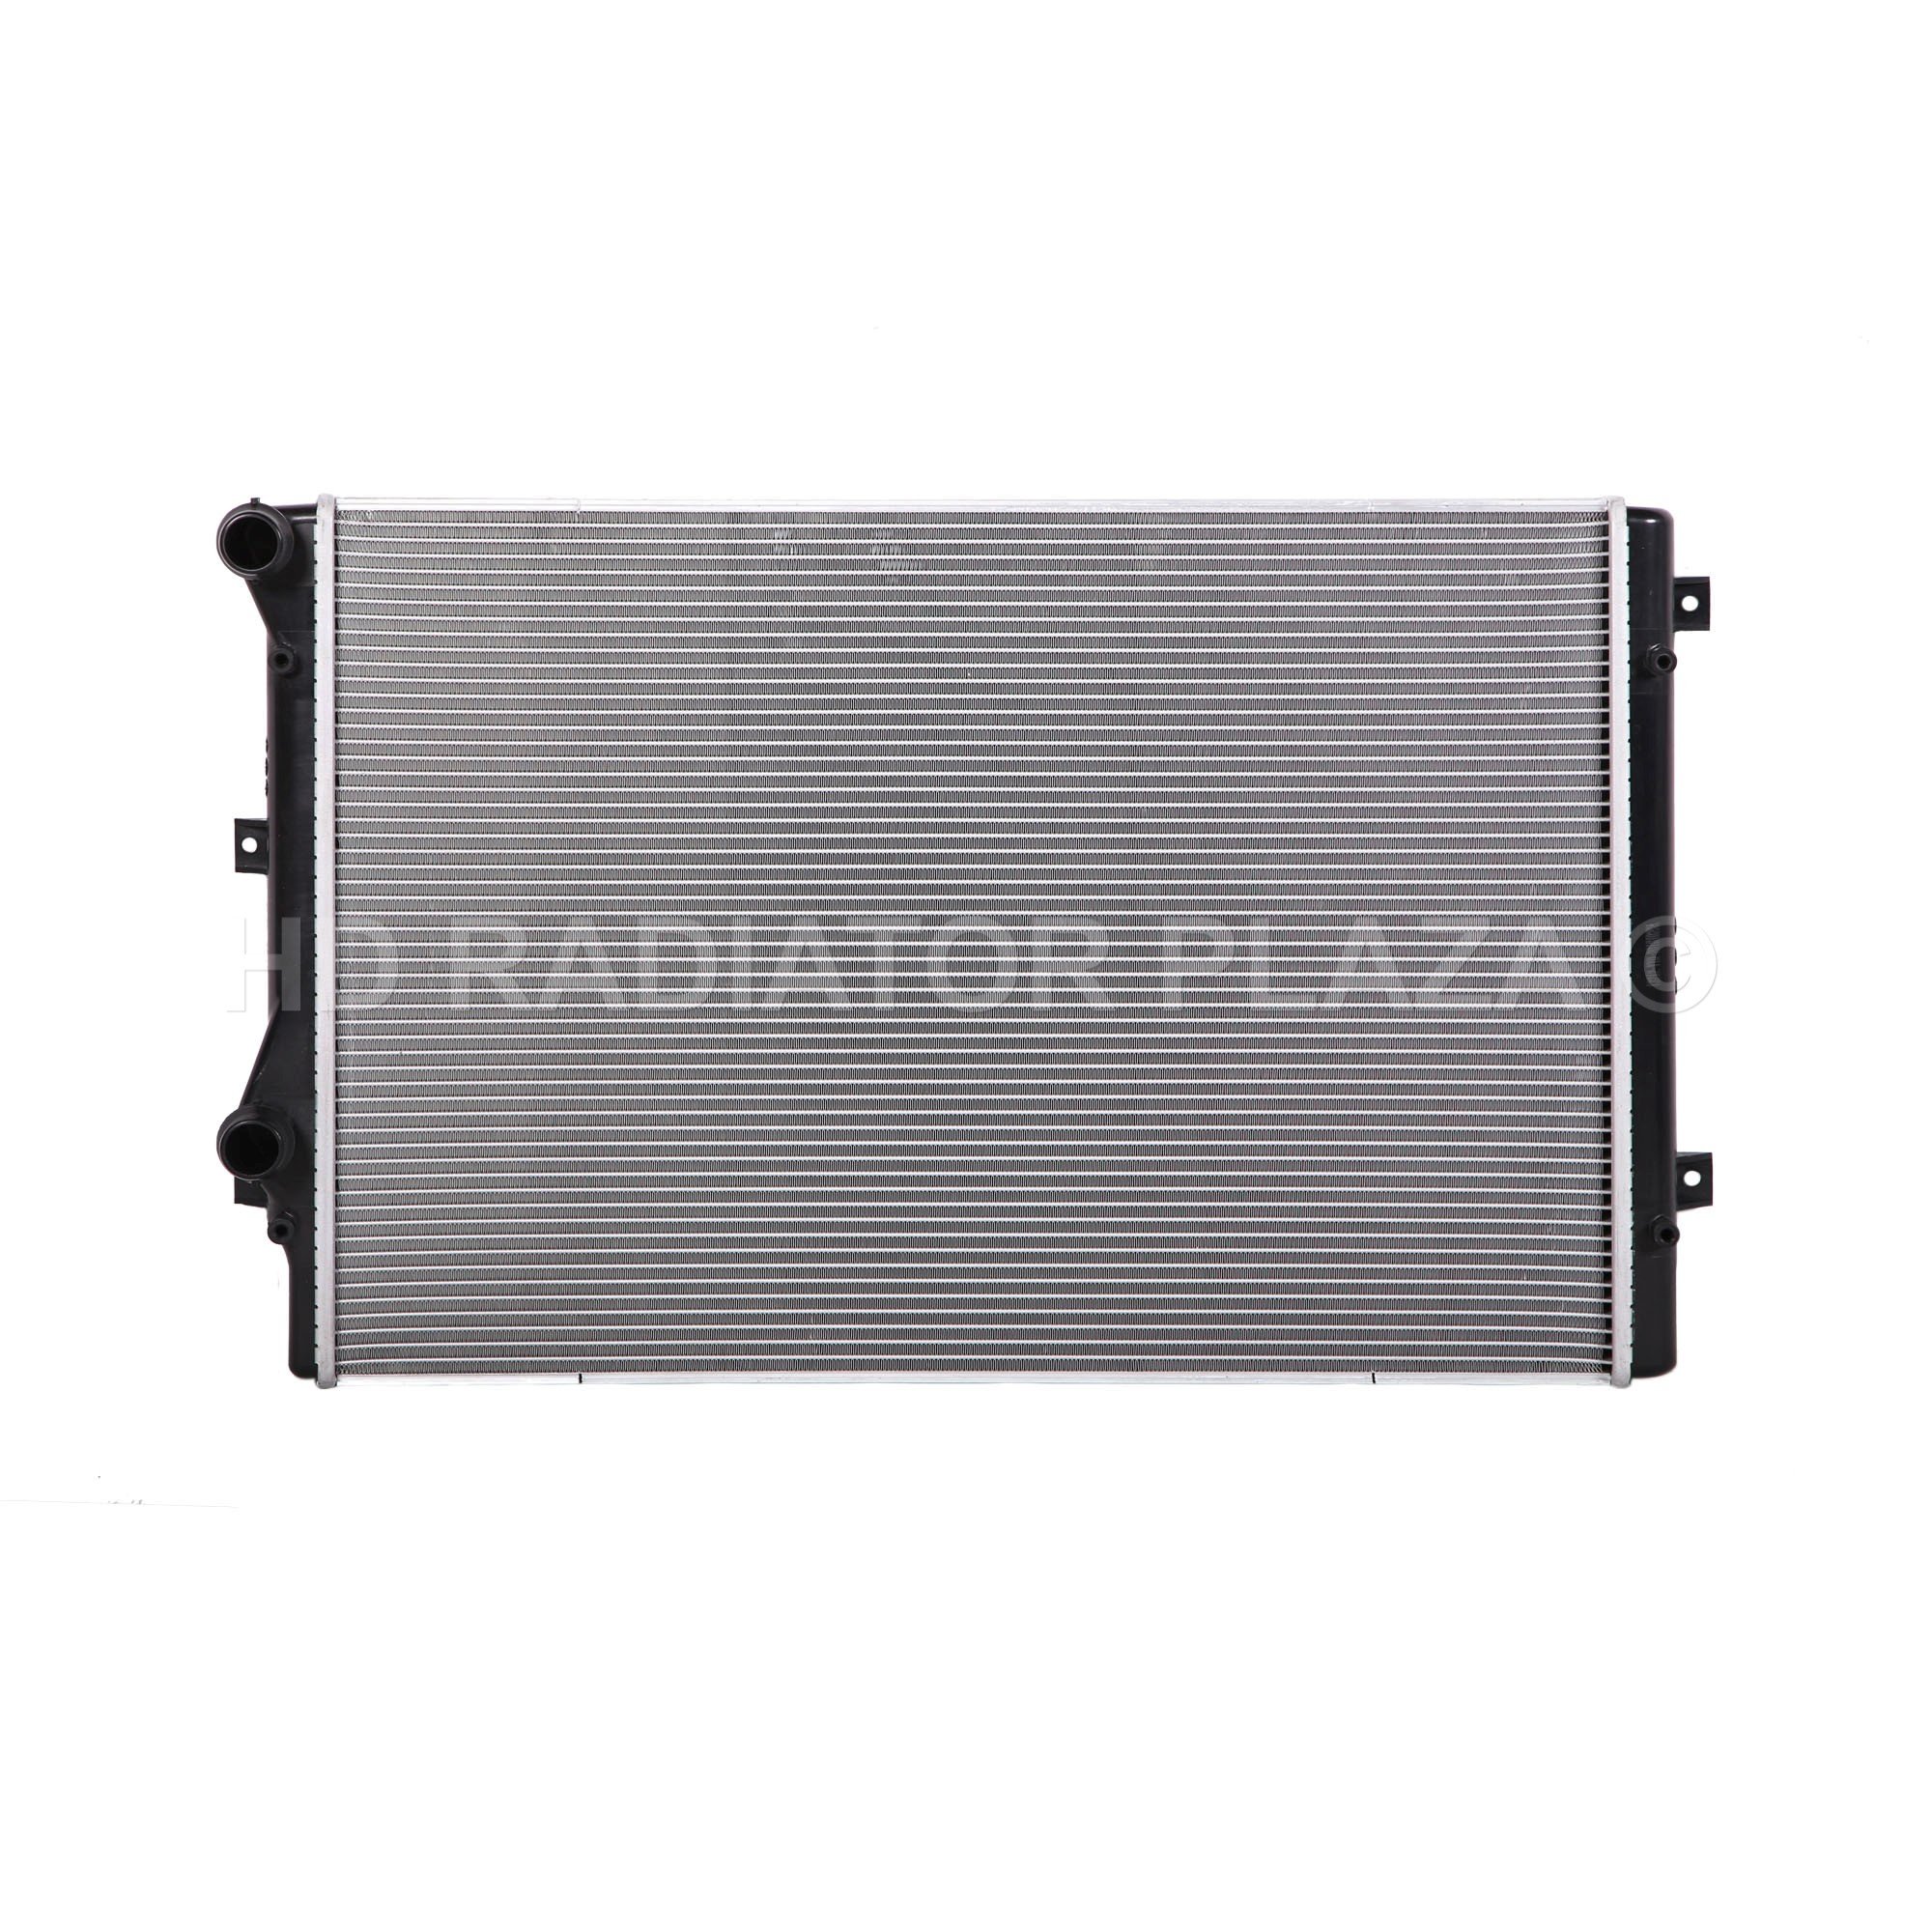 Radiator for 08-18 Audi Q3/Q5/A3/A4/A5/A6/TT Quattro/all road, Volkswagen Beetle/CC Eos/Golf/GTI/Jetta/Passat/Tiguan